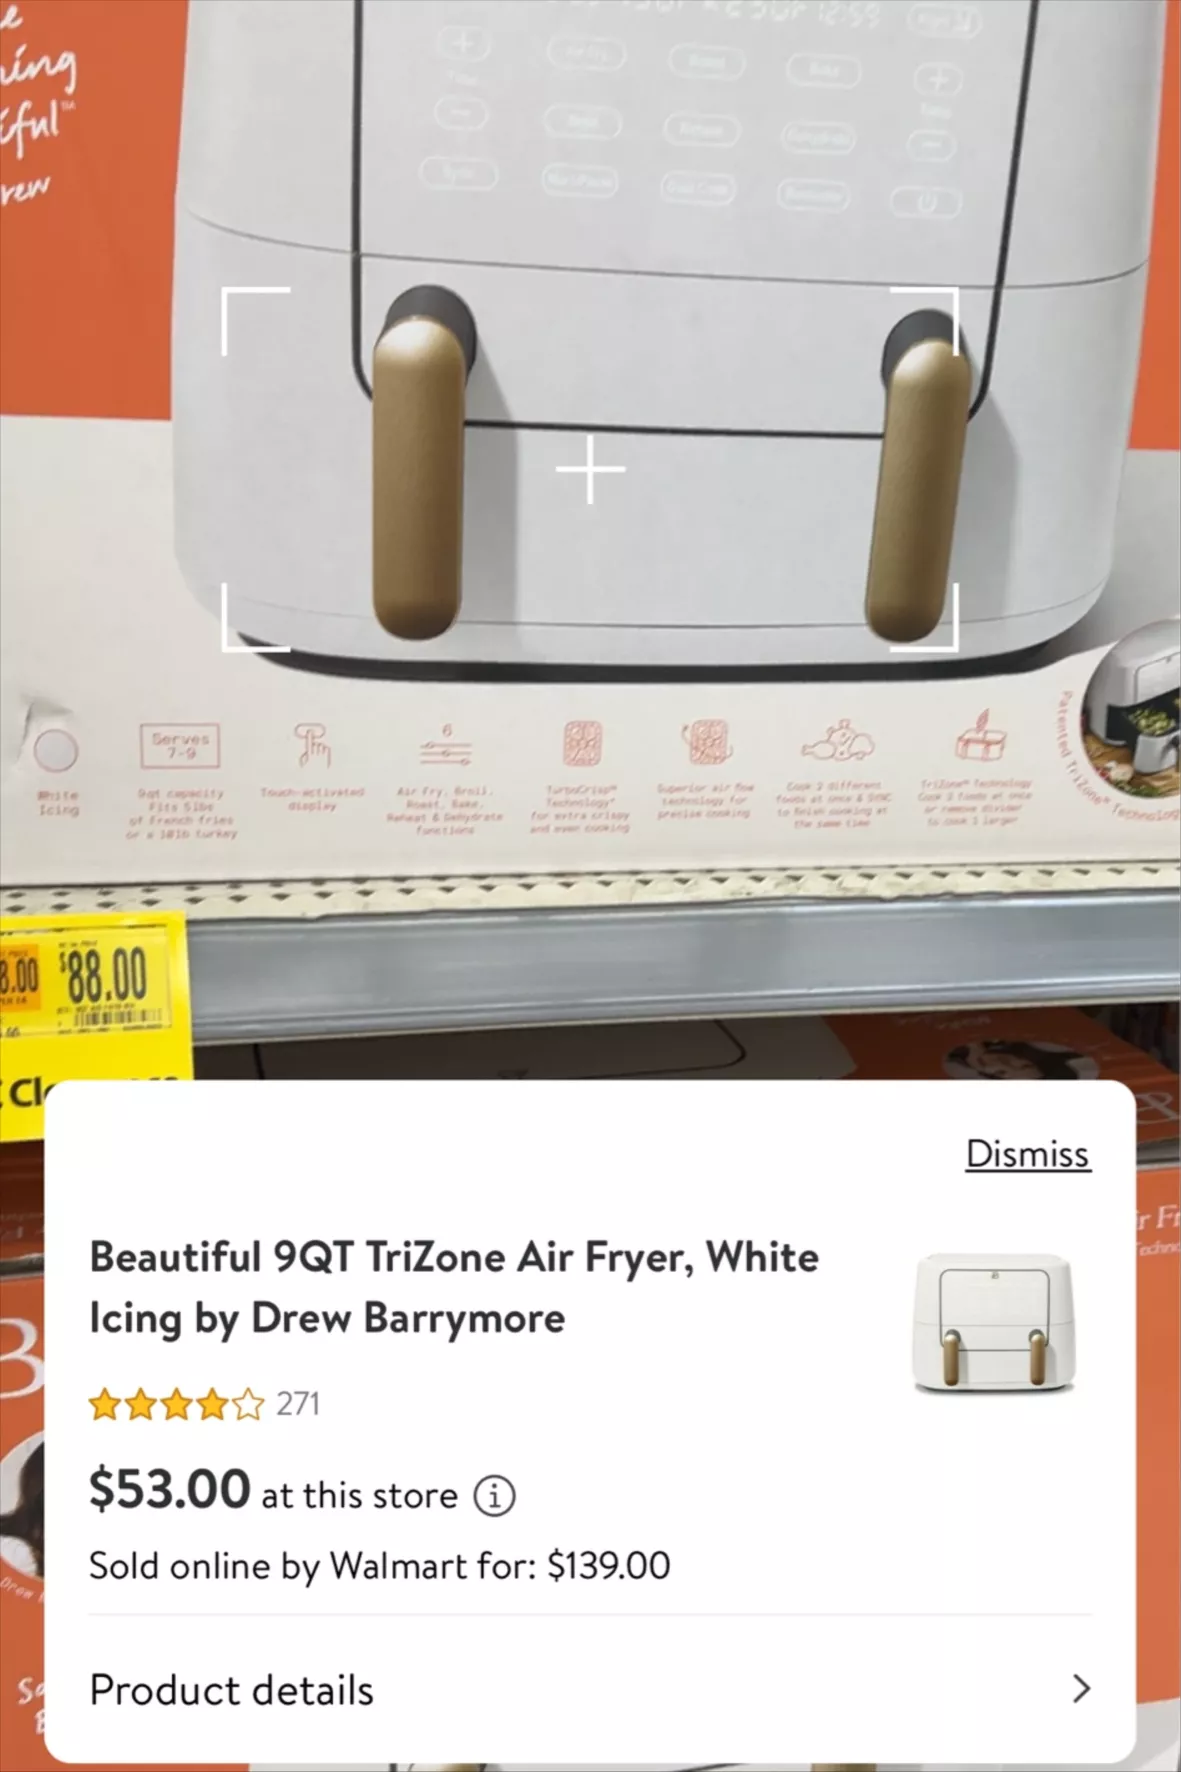 Beautiful 9QT TriZone Air Fryer by Drew Barrymore